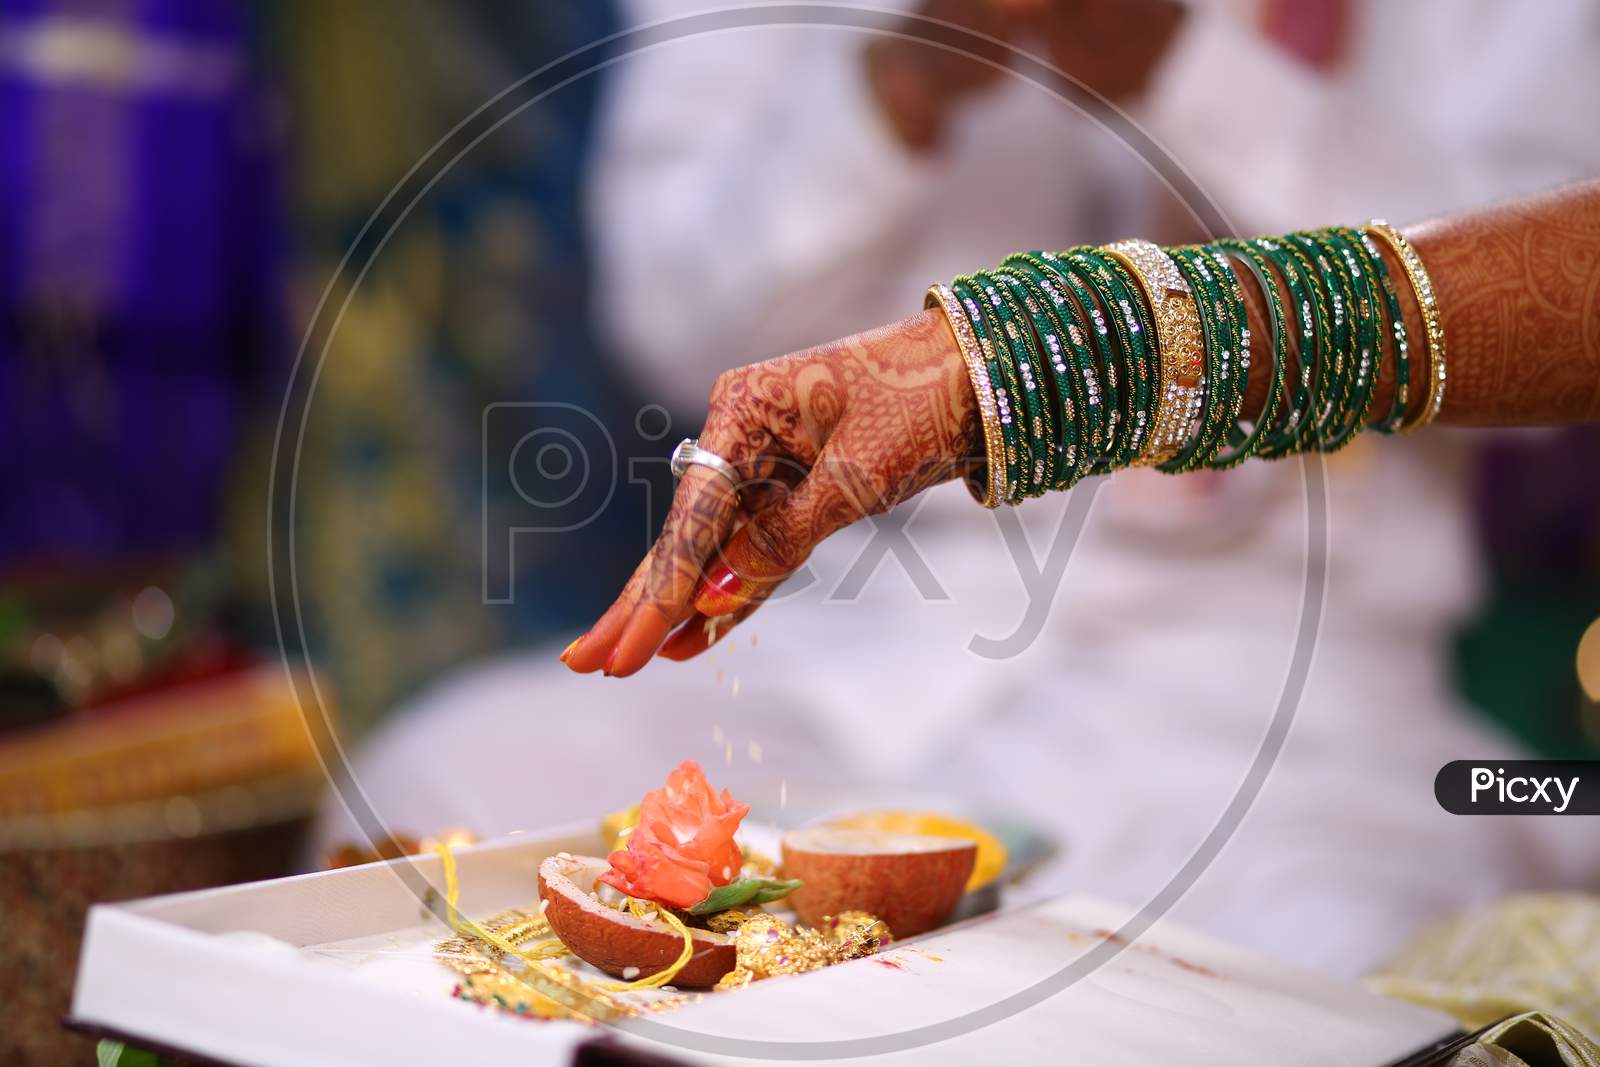 Traditional Wedding Rituals At Indian Hindu Wedding Ceremony